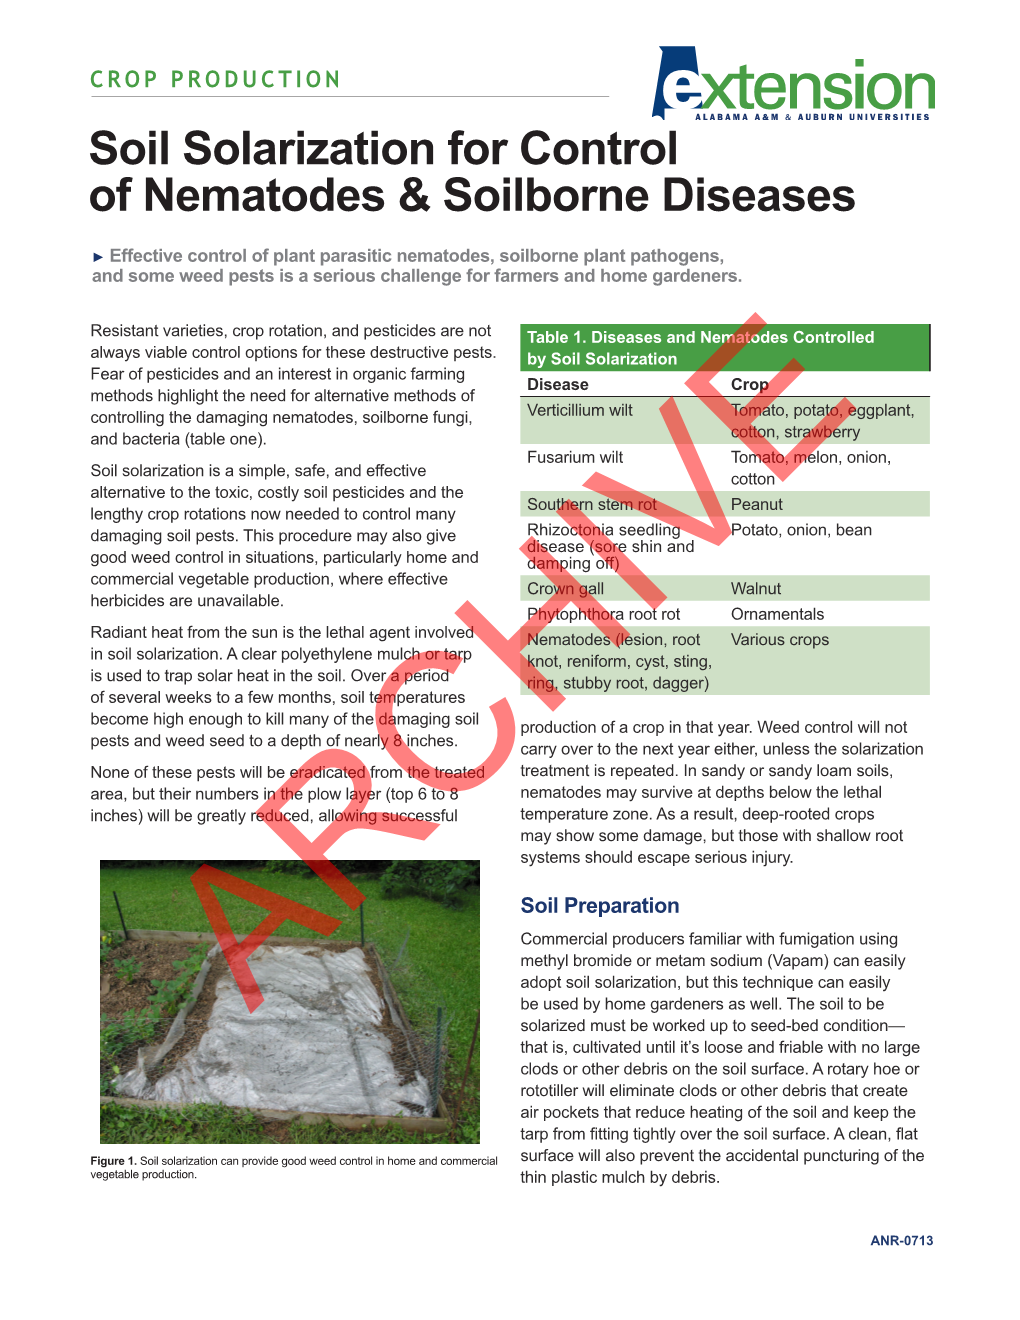 Soil Solarization for Control of Nematodes & Soilborne Diseases